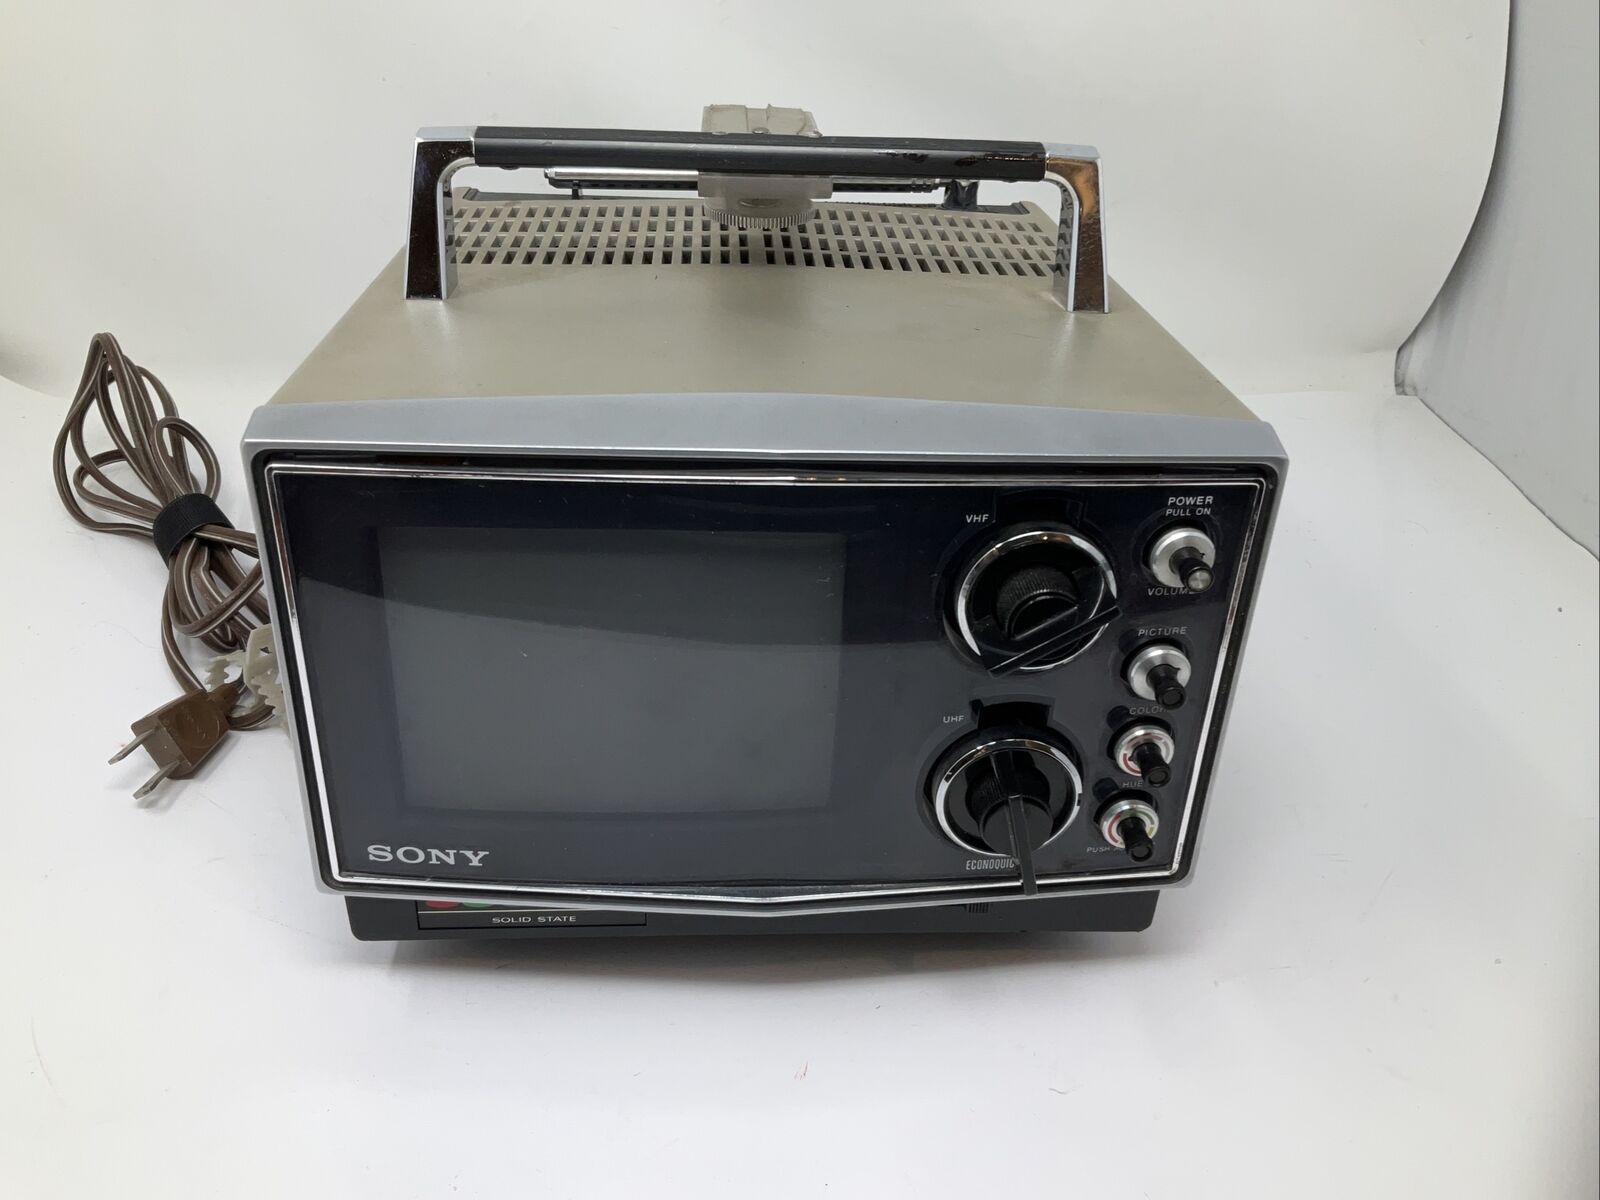 Sony Trinitron Solid State TV kv-5100 Retro Model